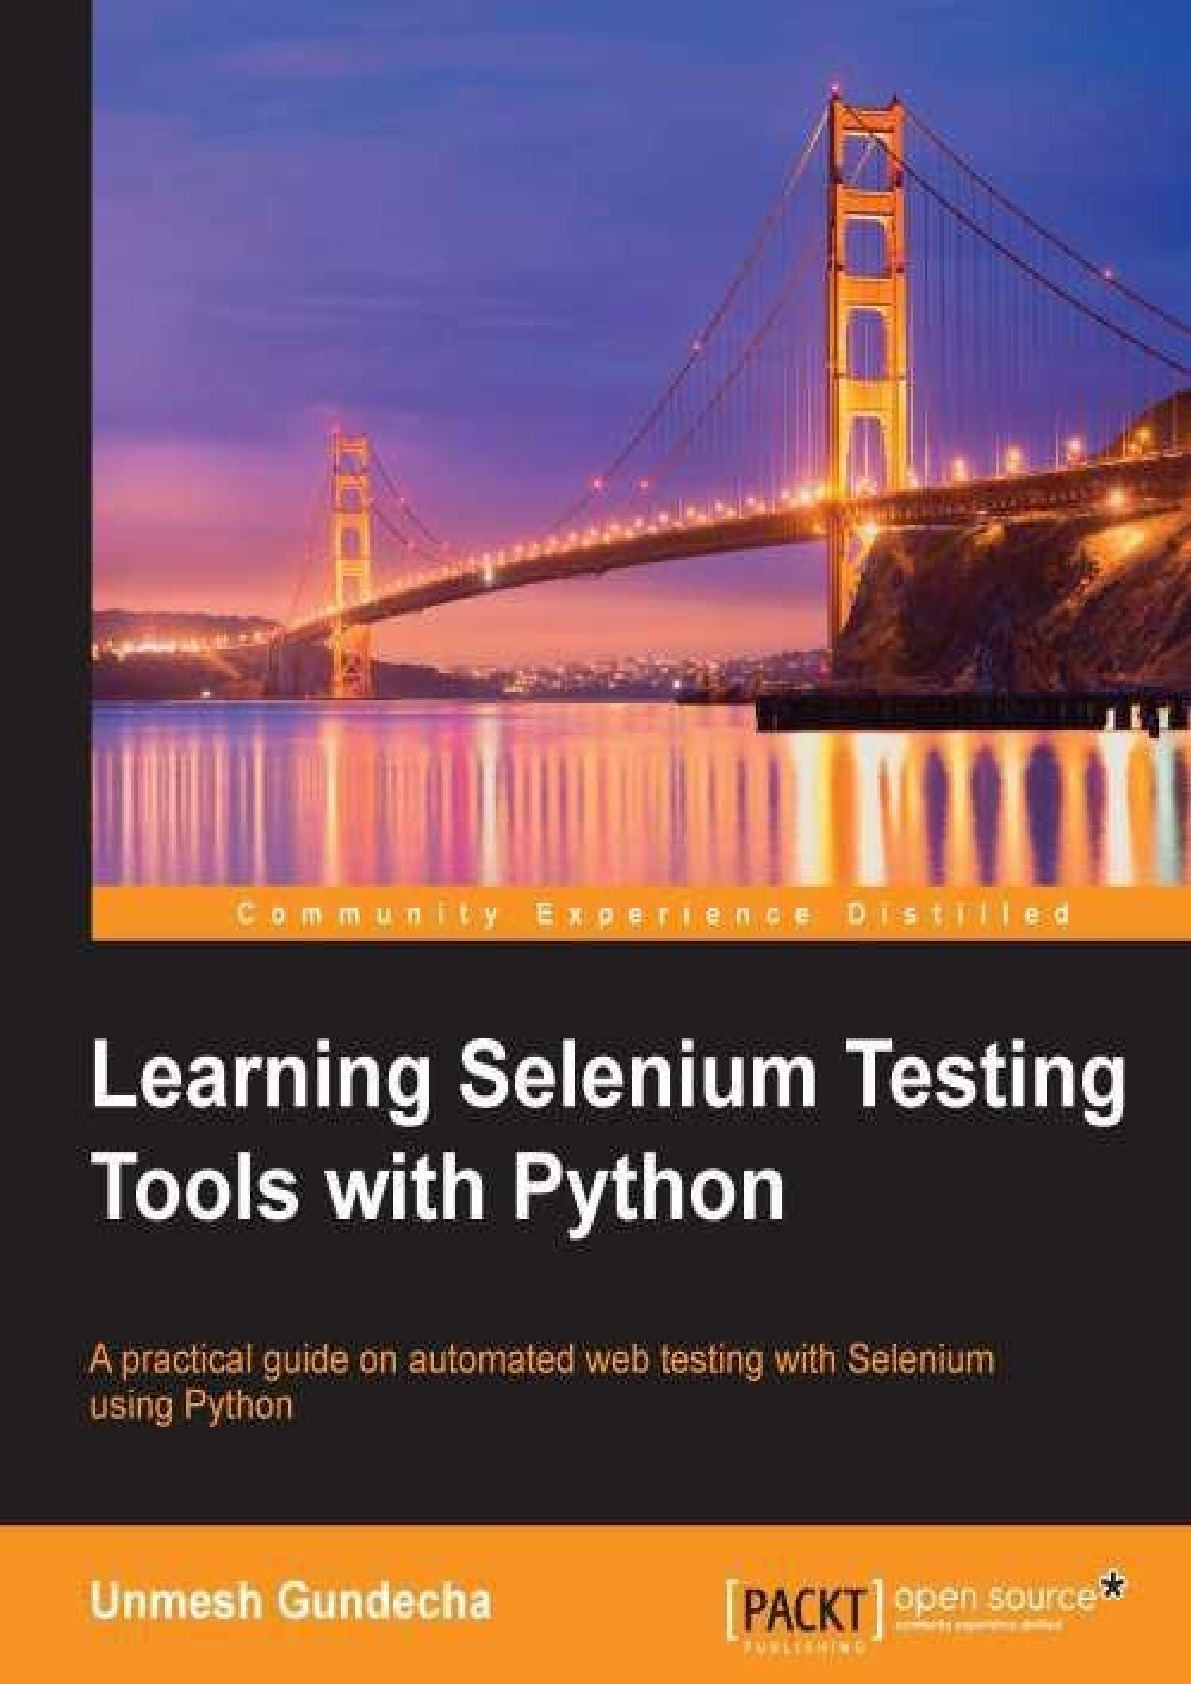 learn_selenium